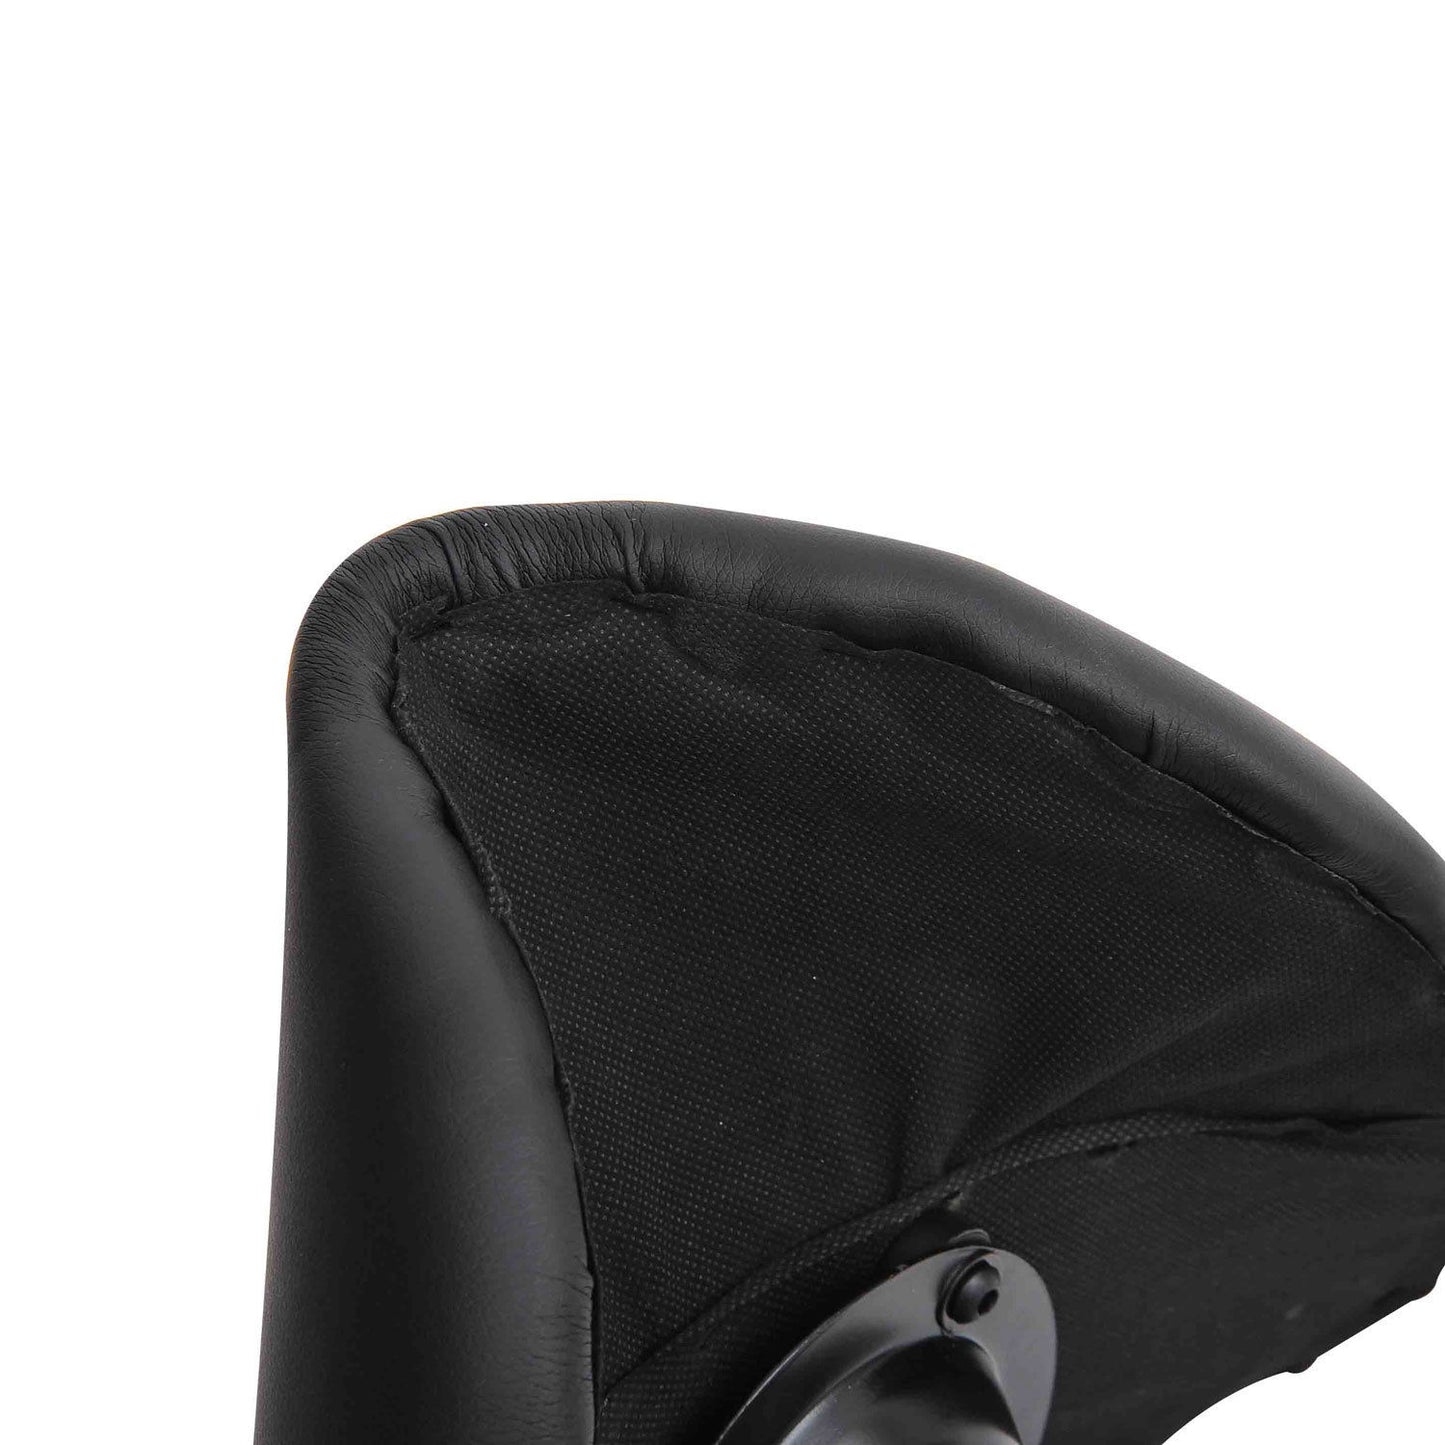 HOMCOM PU Leather Height Adjustable Rotating Drawing Work SPA Medical Salon Chair Saddle Stool Black